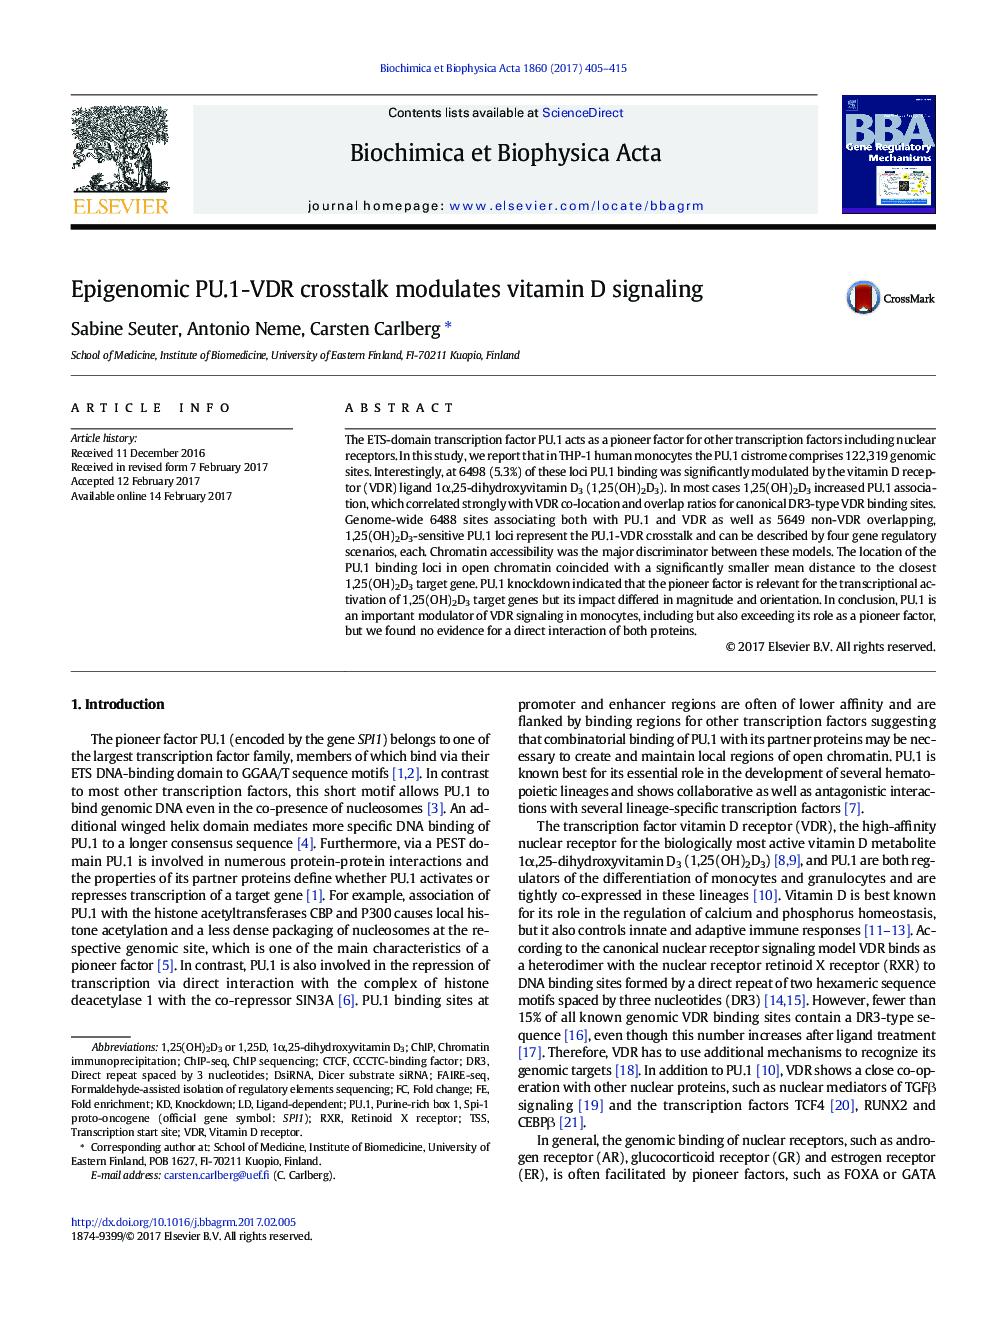 Epigenomic PU.1-VDR crosstalk modulates vitamin D signaling